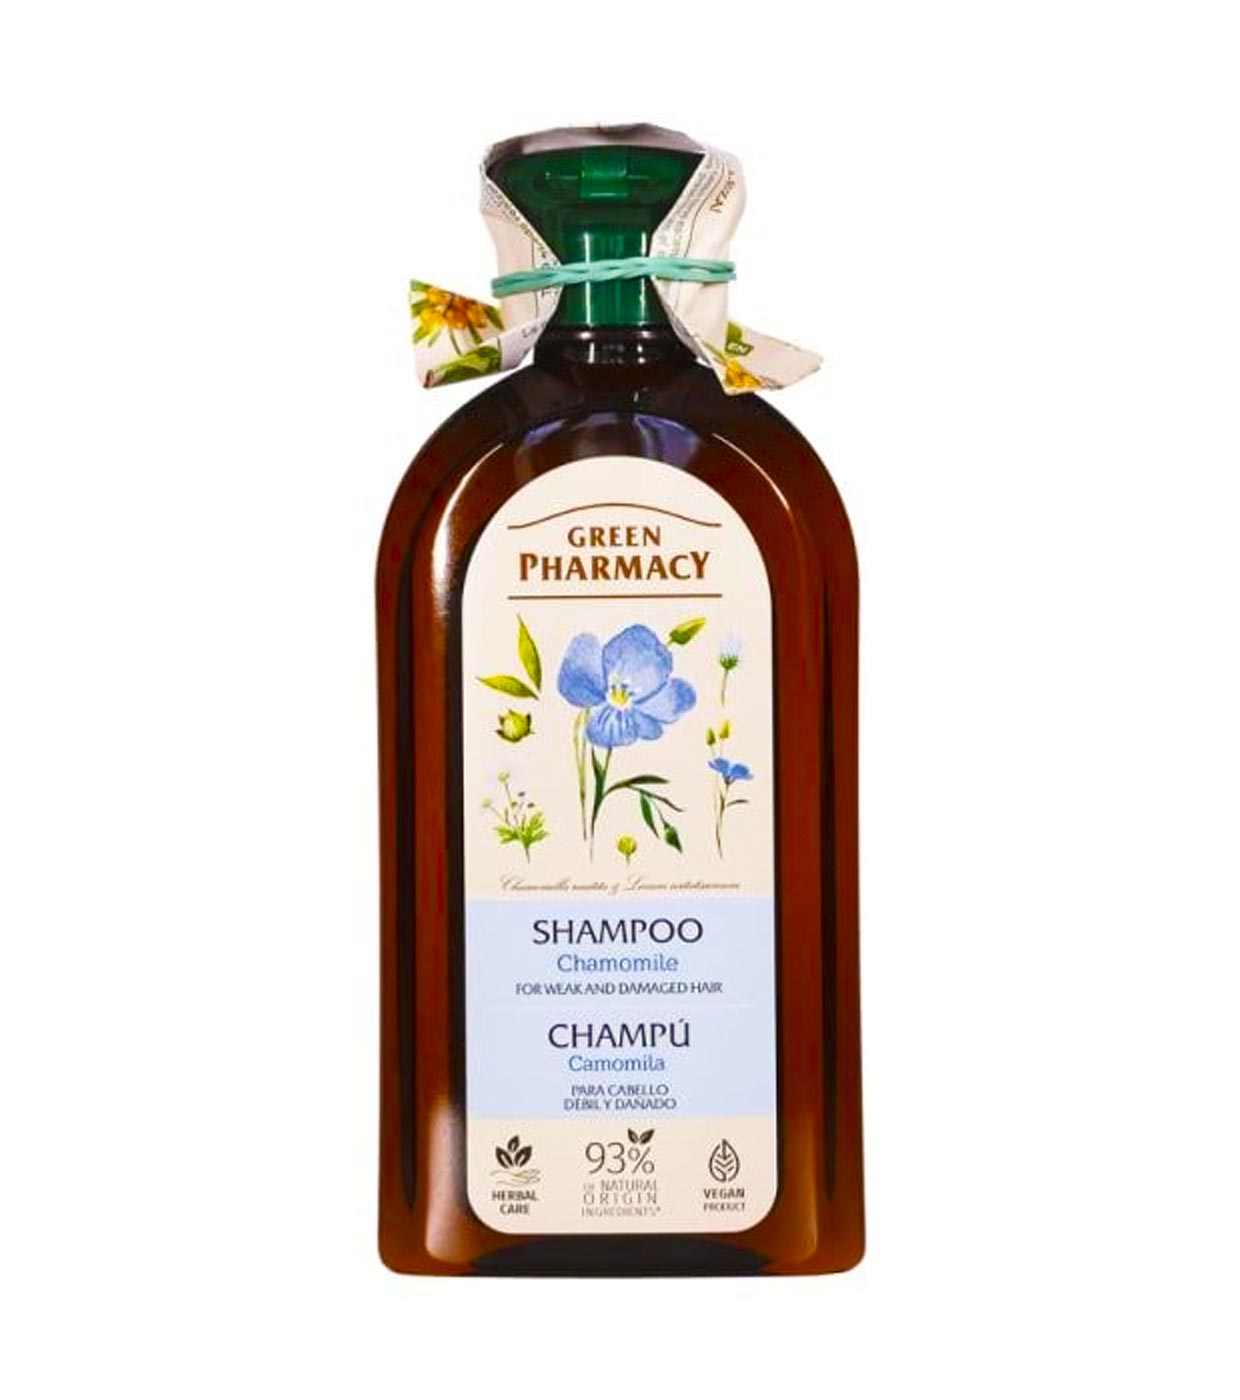 green pharmacy herbal cosmetics hair care szampon